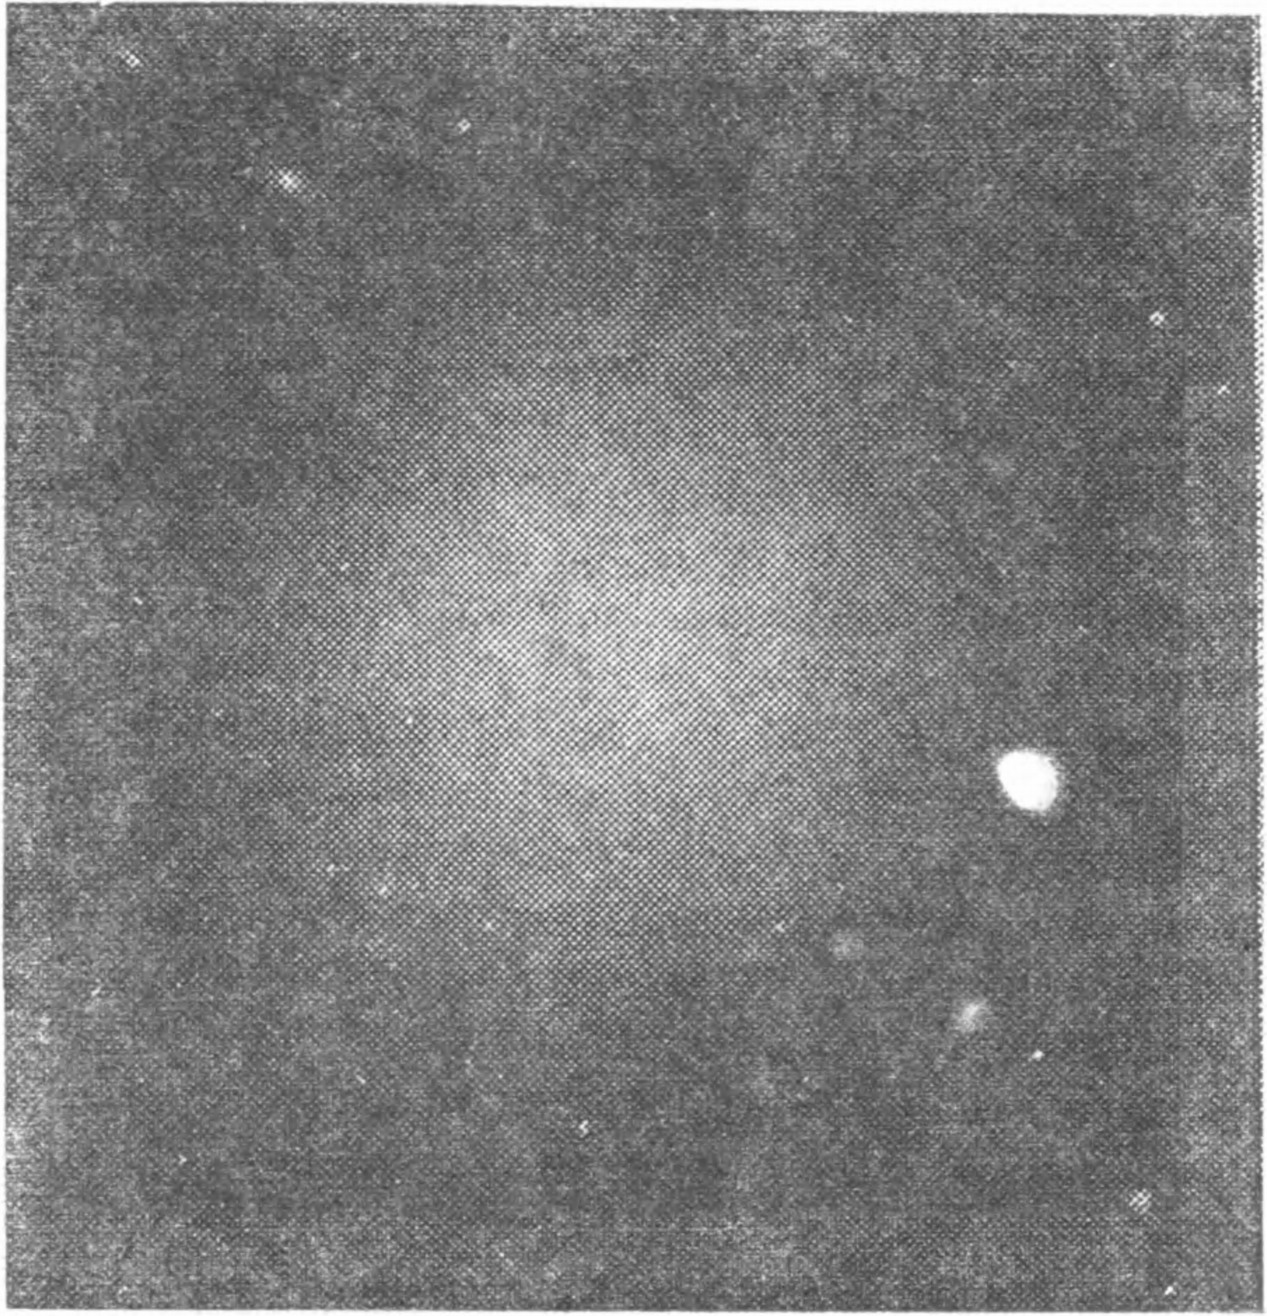 Рис. 193. Галактика M 87 со скоплениями